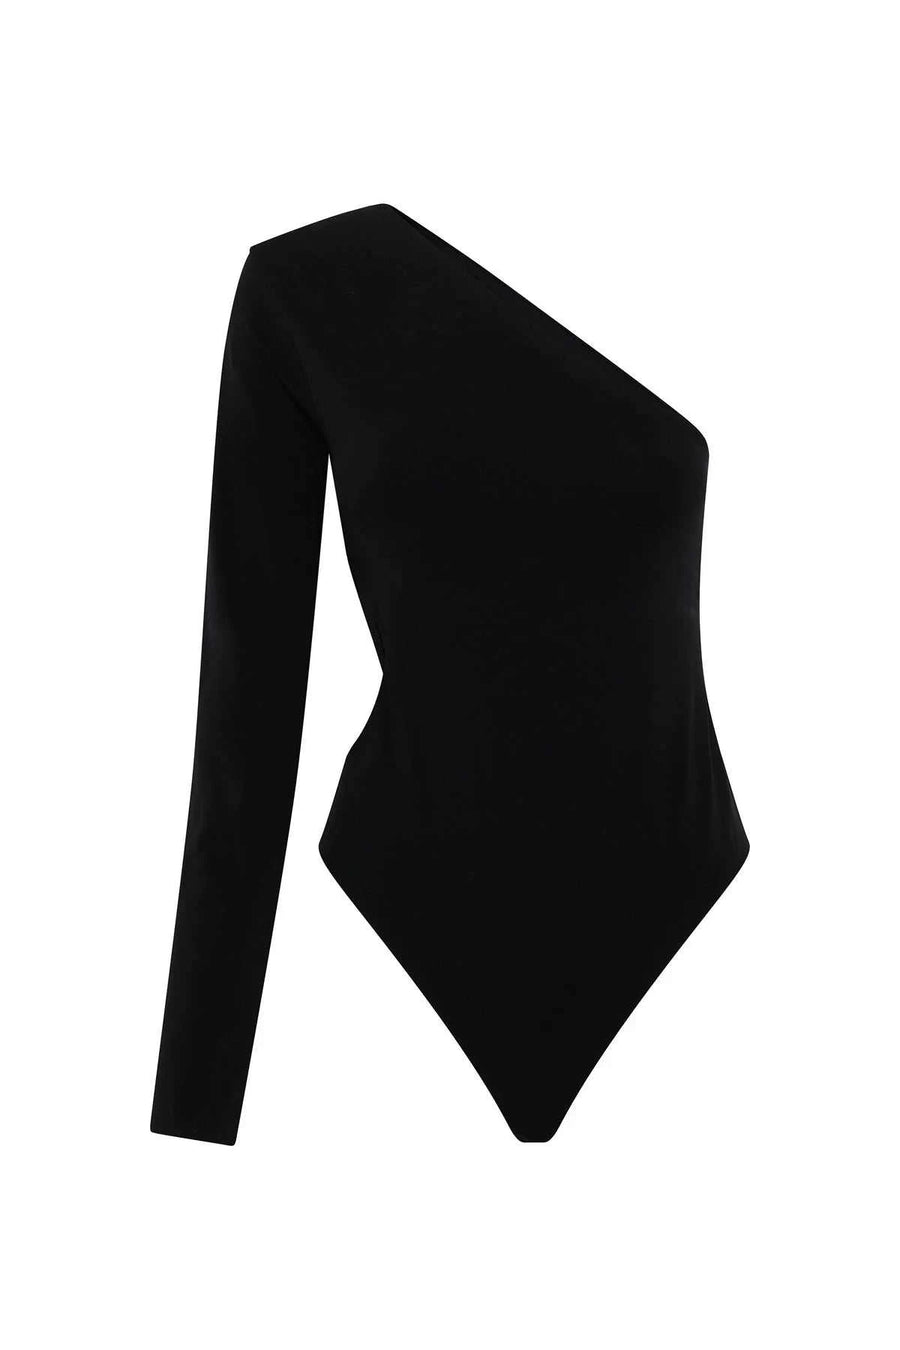 C&M Flinders Bodysuit in Black